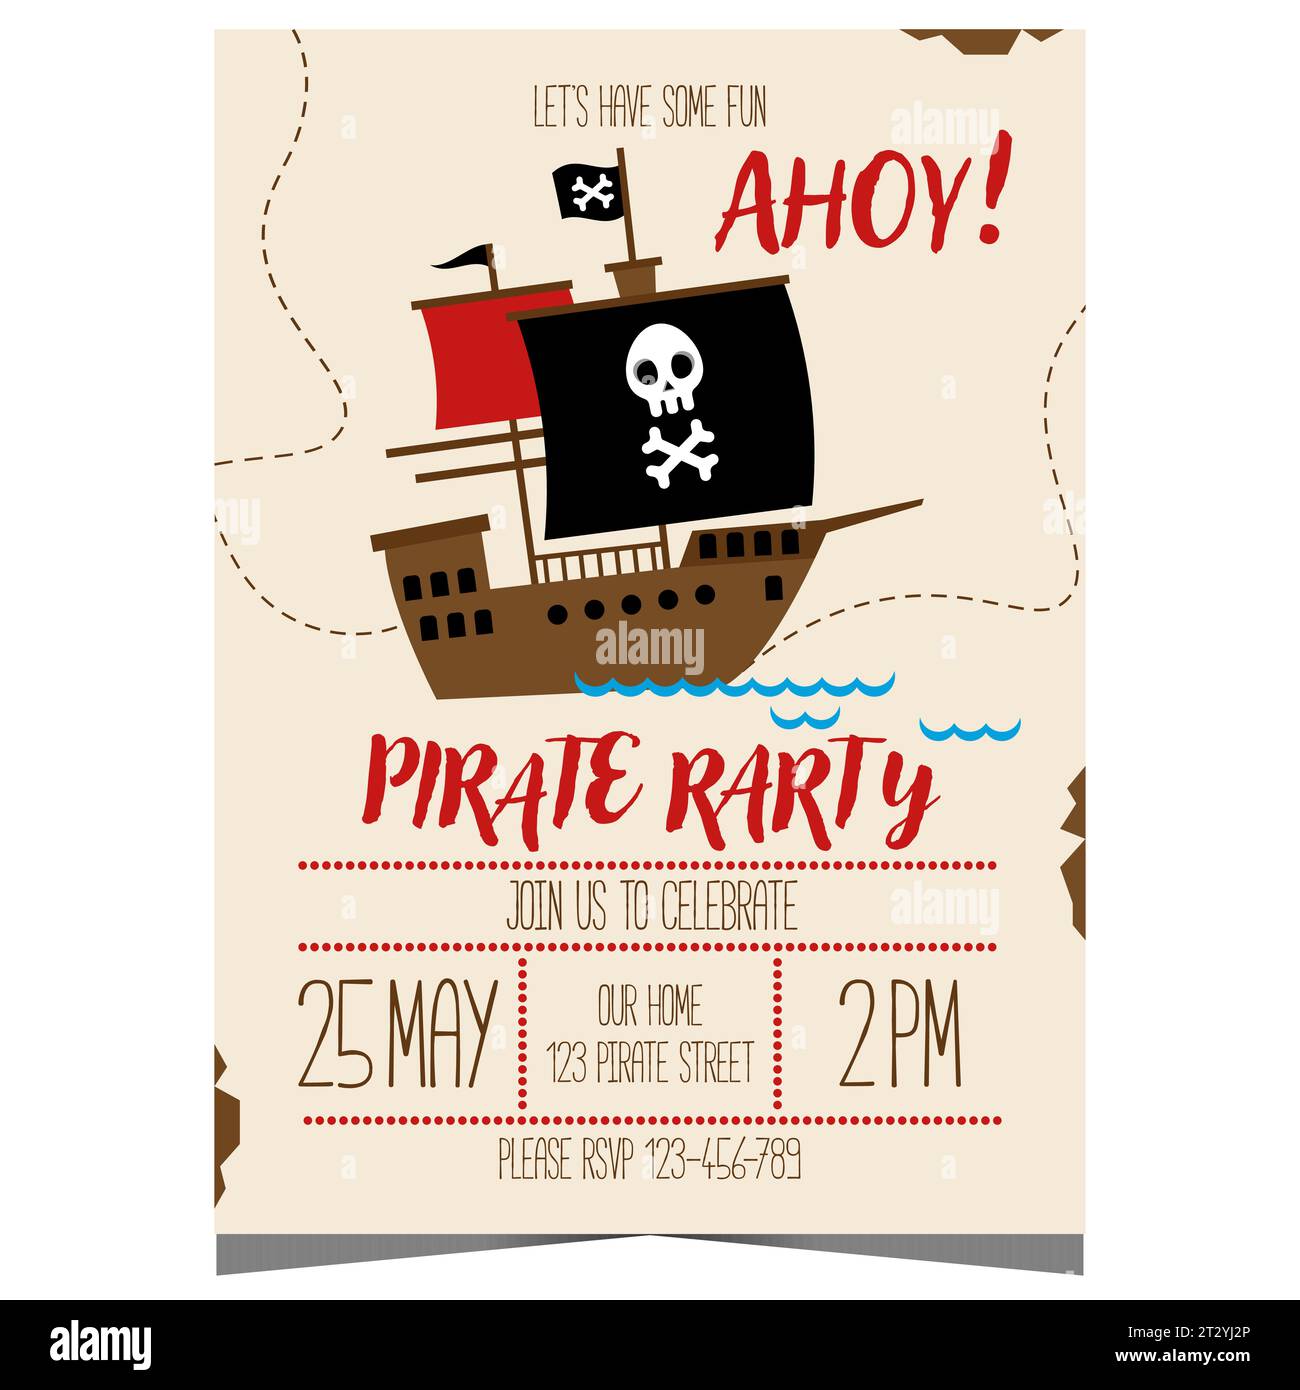 Ahoy! Pirates make port in West Virginia